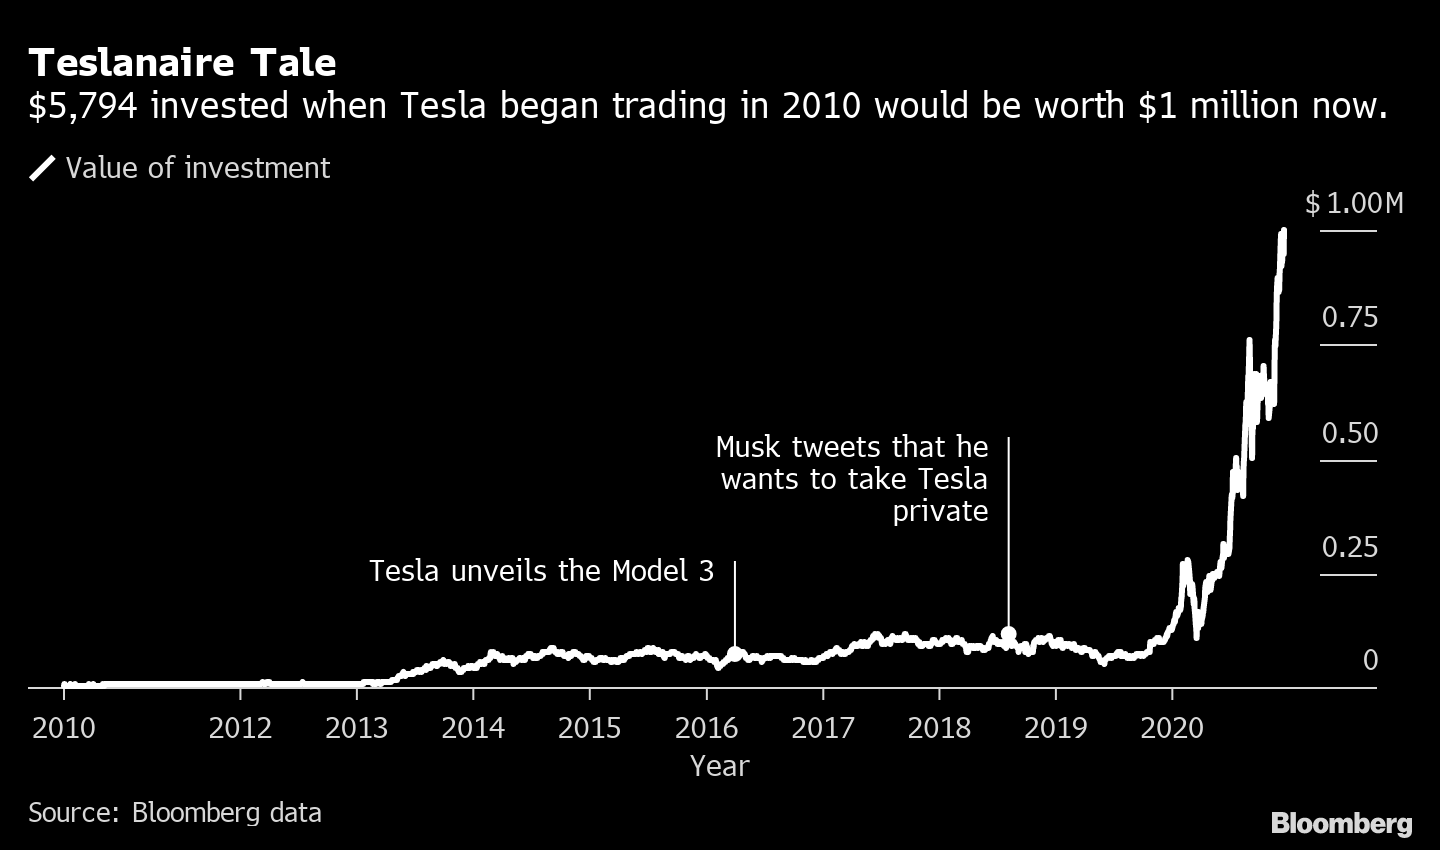 Tsla Stock Forecast What Is Tesla S Tsla Stock Forecast For 2025